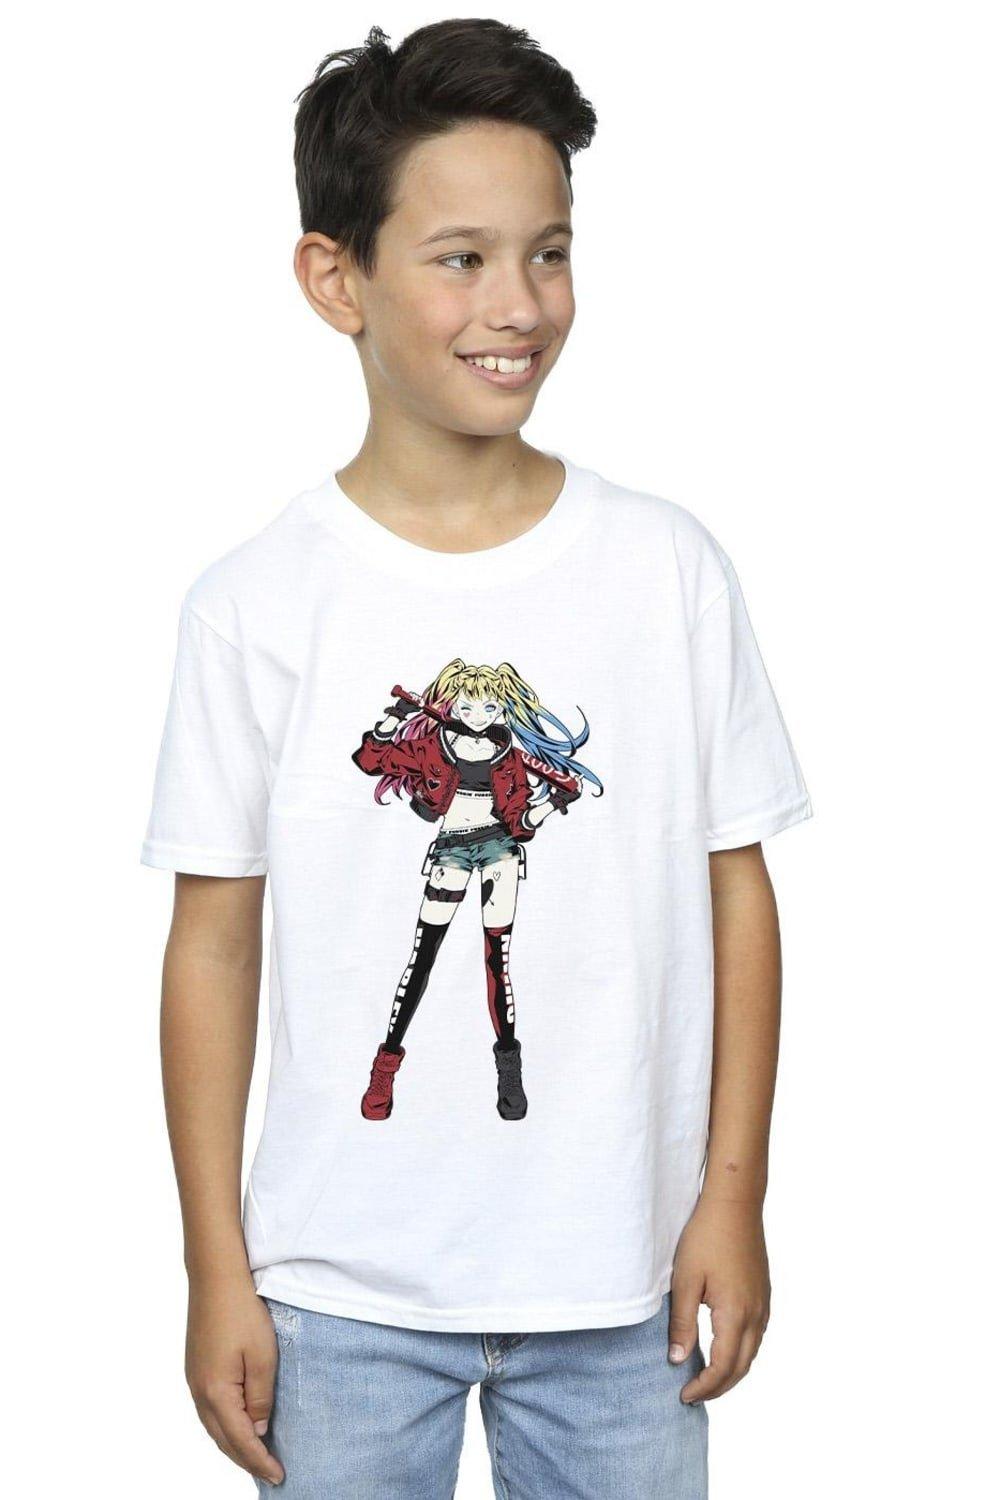 Harley Quinn Standing Pose T-Shirt